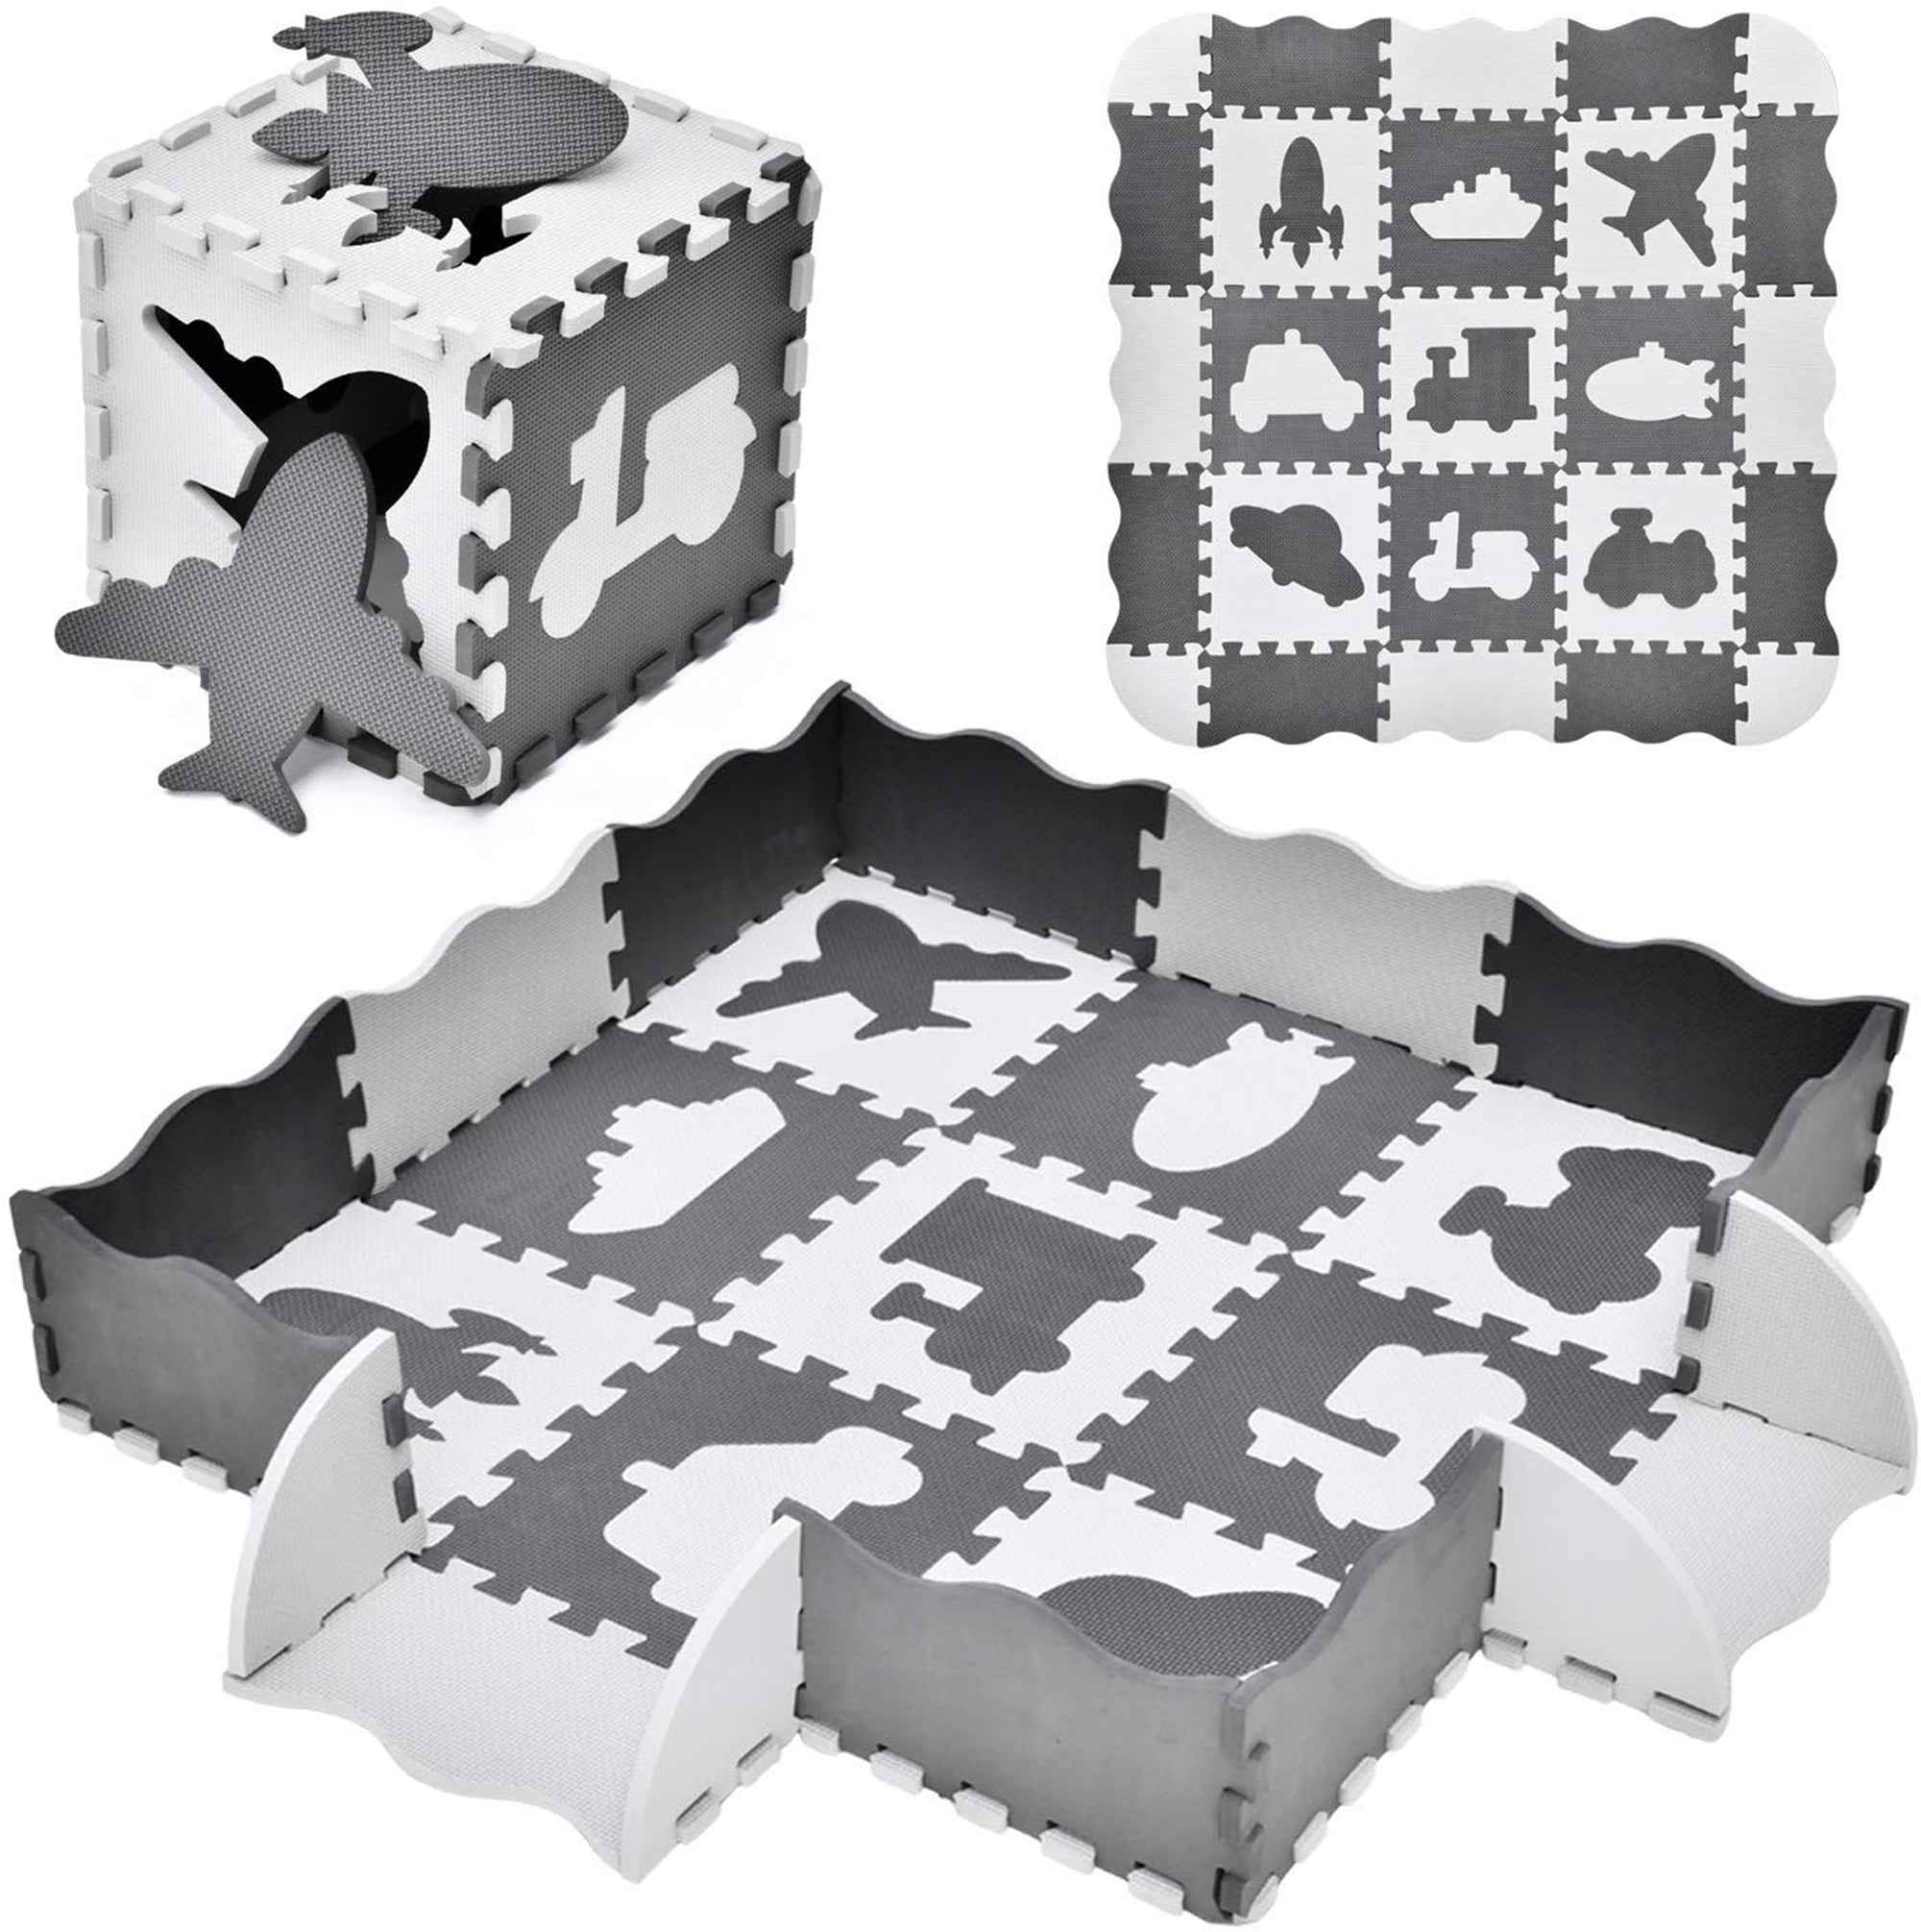 Thick Soft EVA Interlocking Foam Floor Mats for Children Play Mat Pattern Tile 